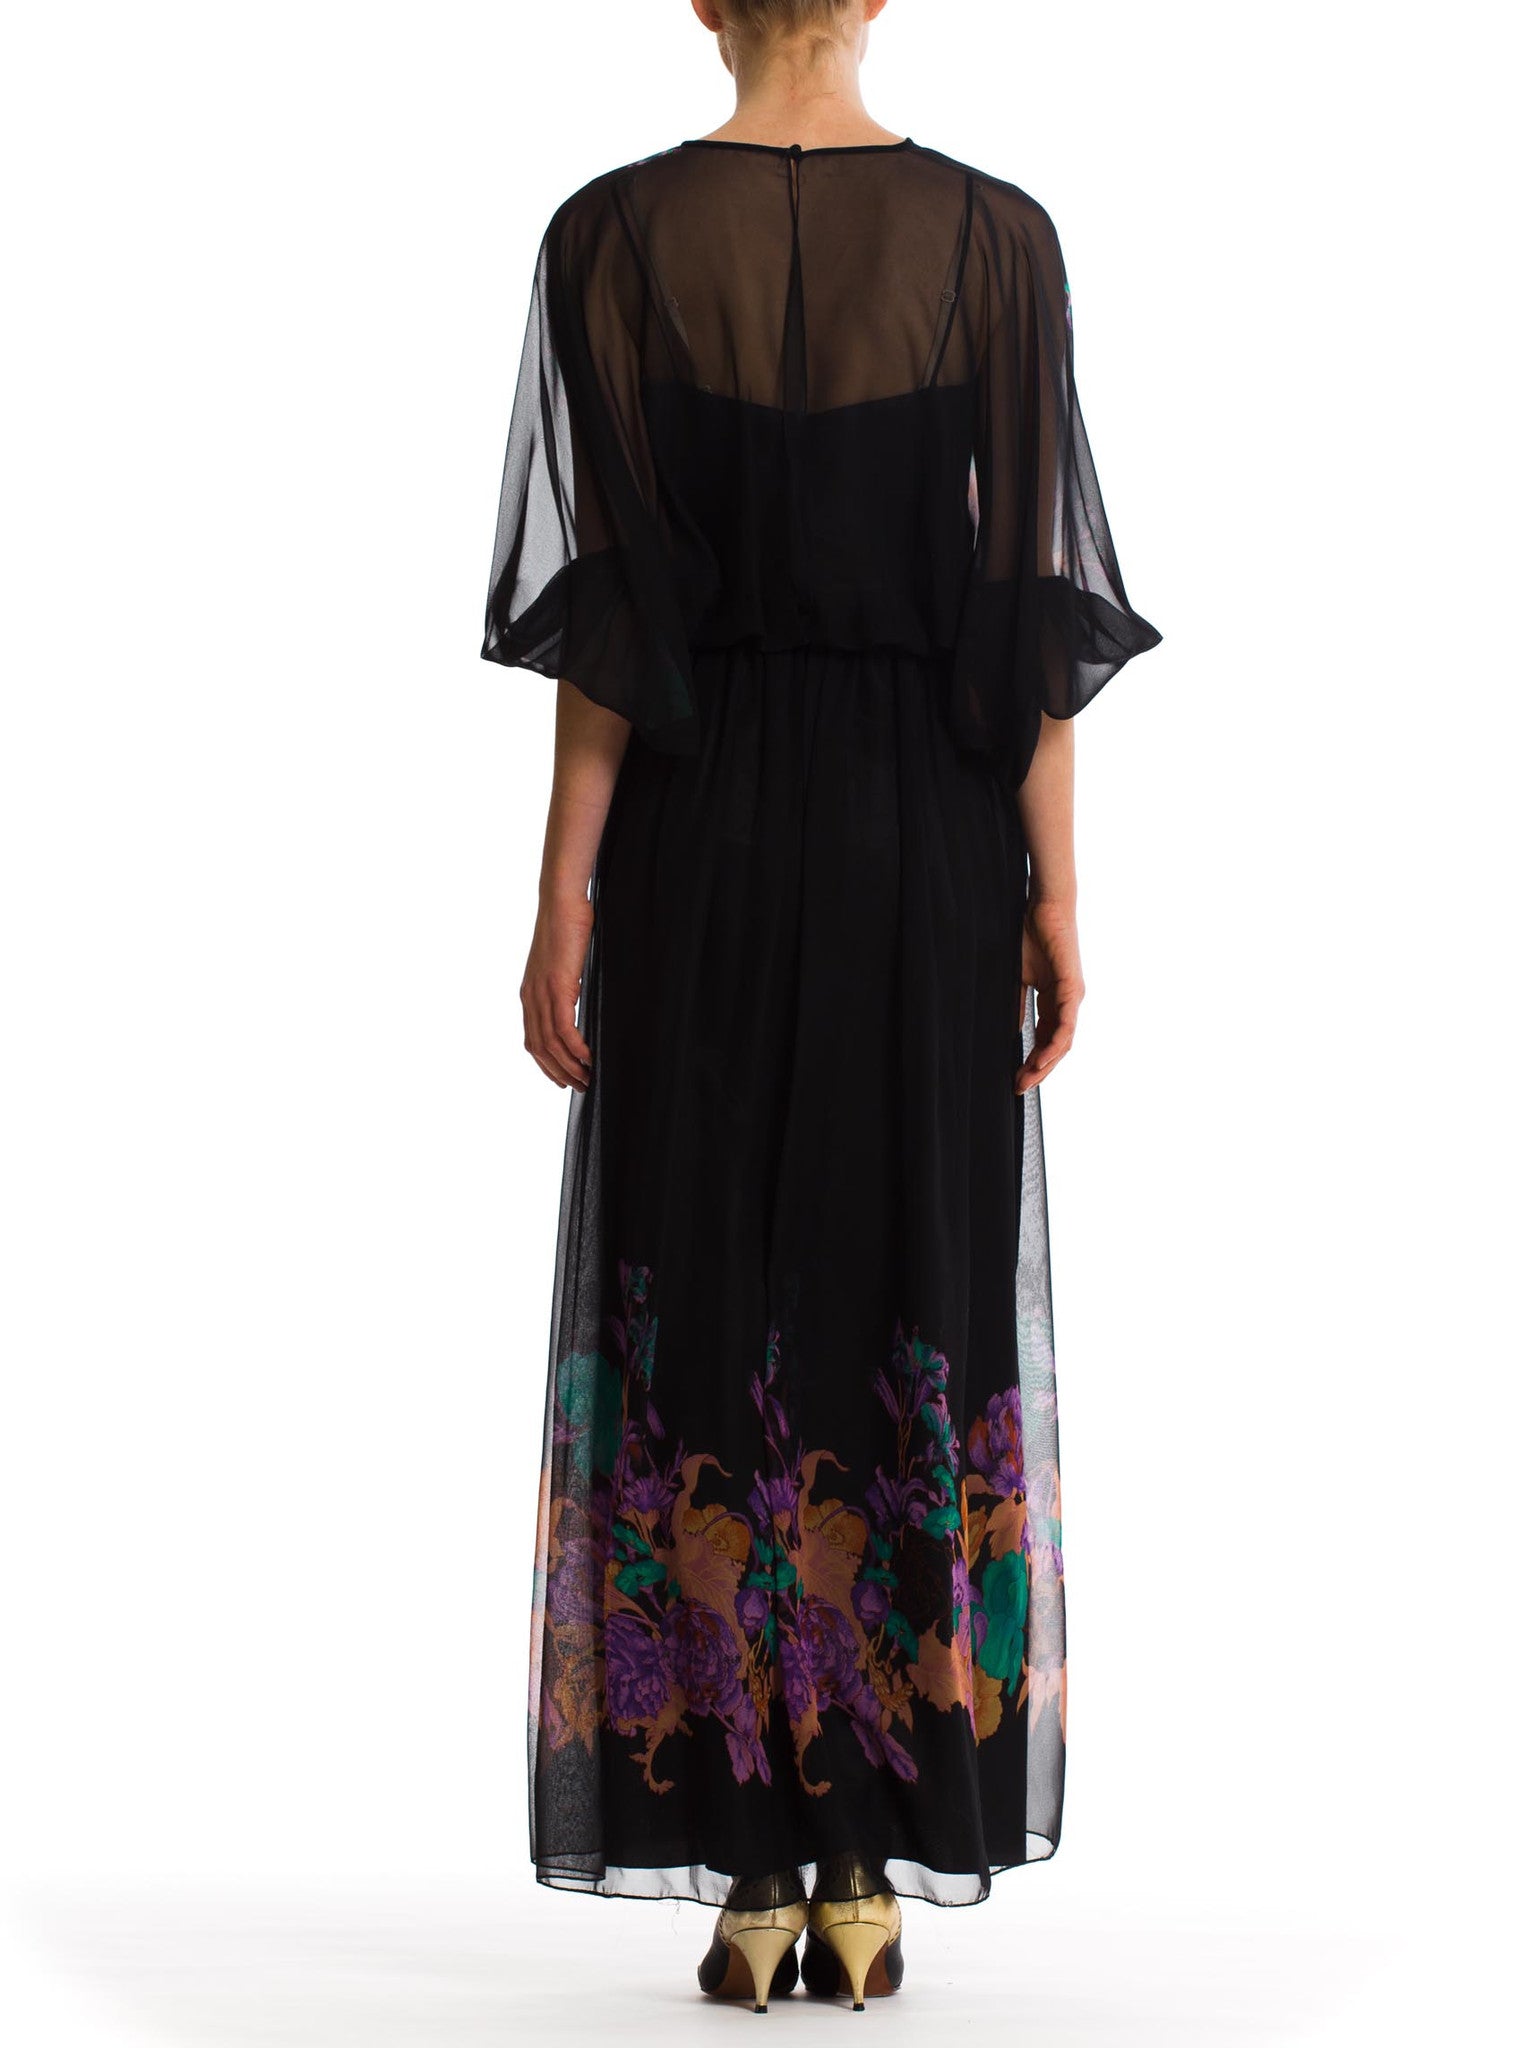 Charming Vintage 1970s Black Floral Print Dress – MORPHEW